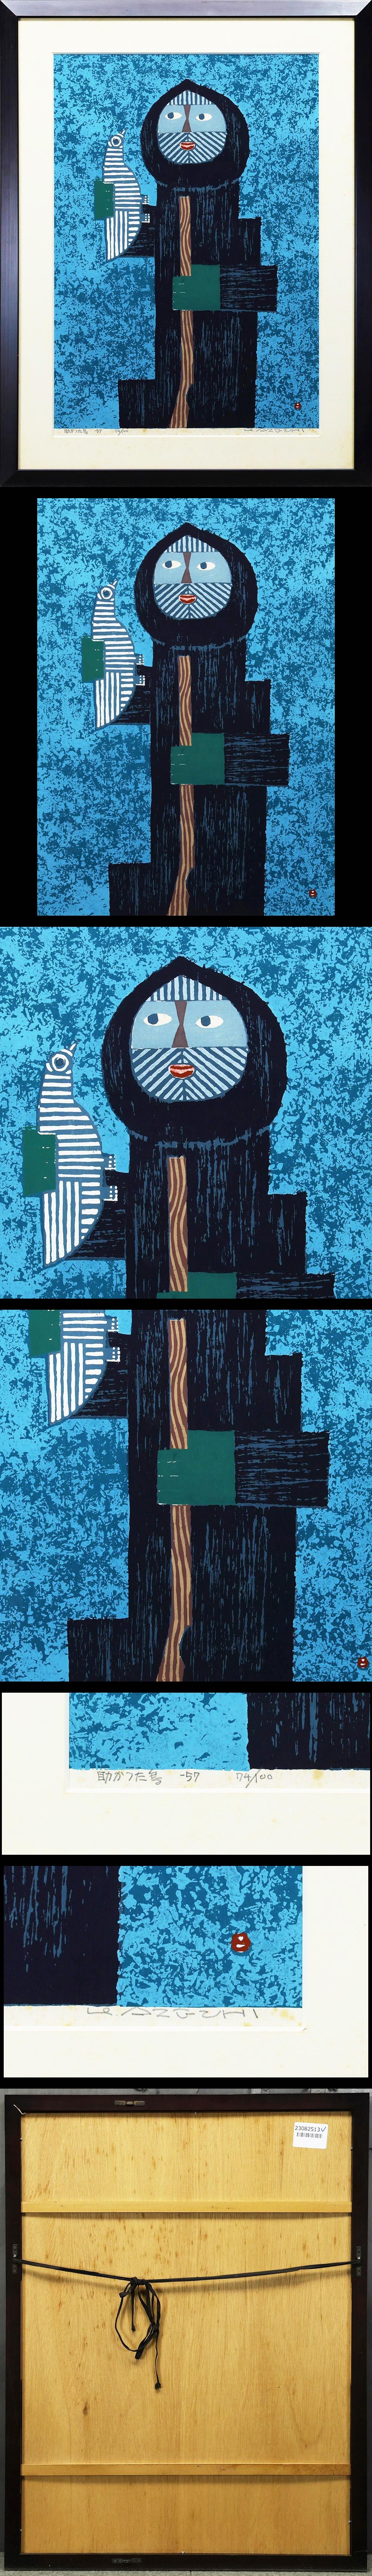 真作】【WISH】畦地梅太郎「助かった鳥」木版画 約12号 大作 1957年作